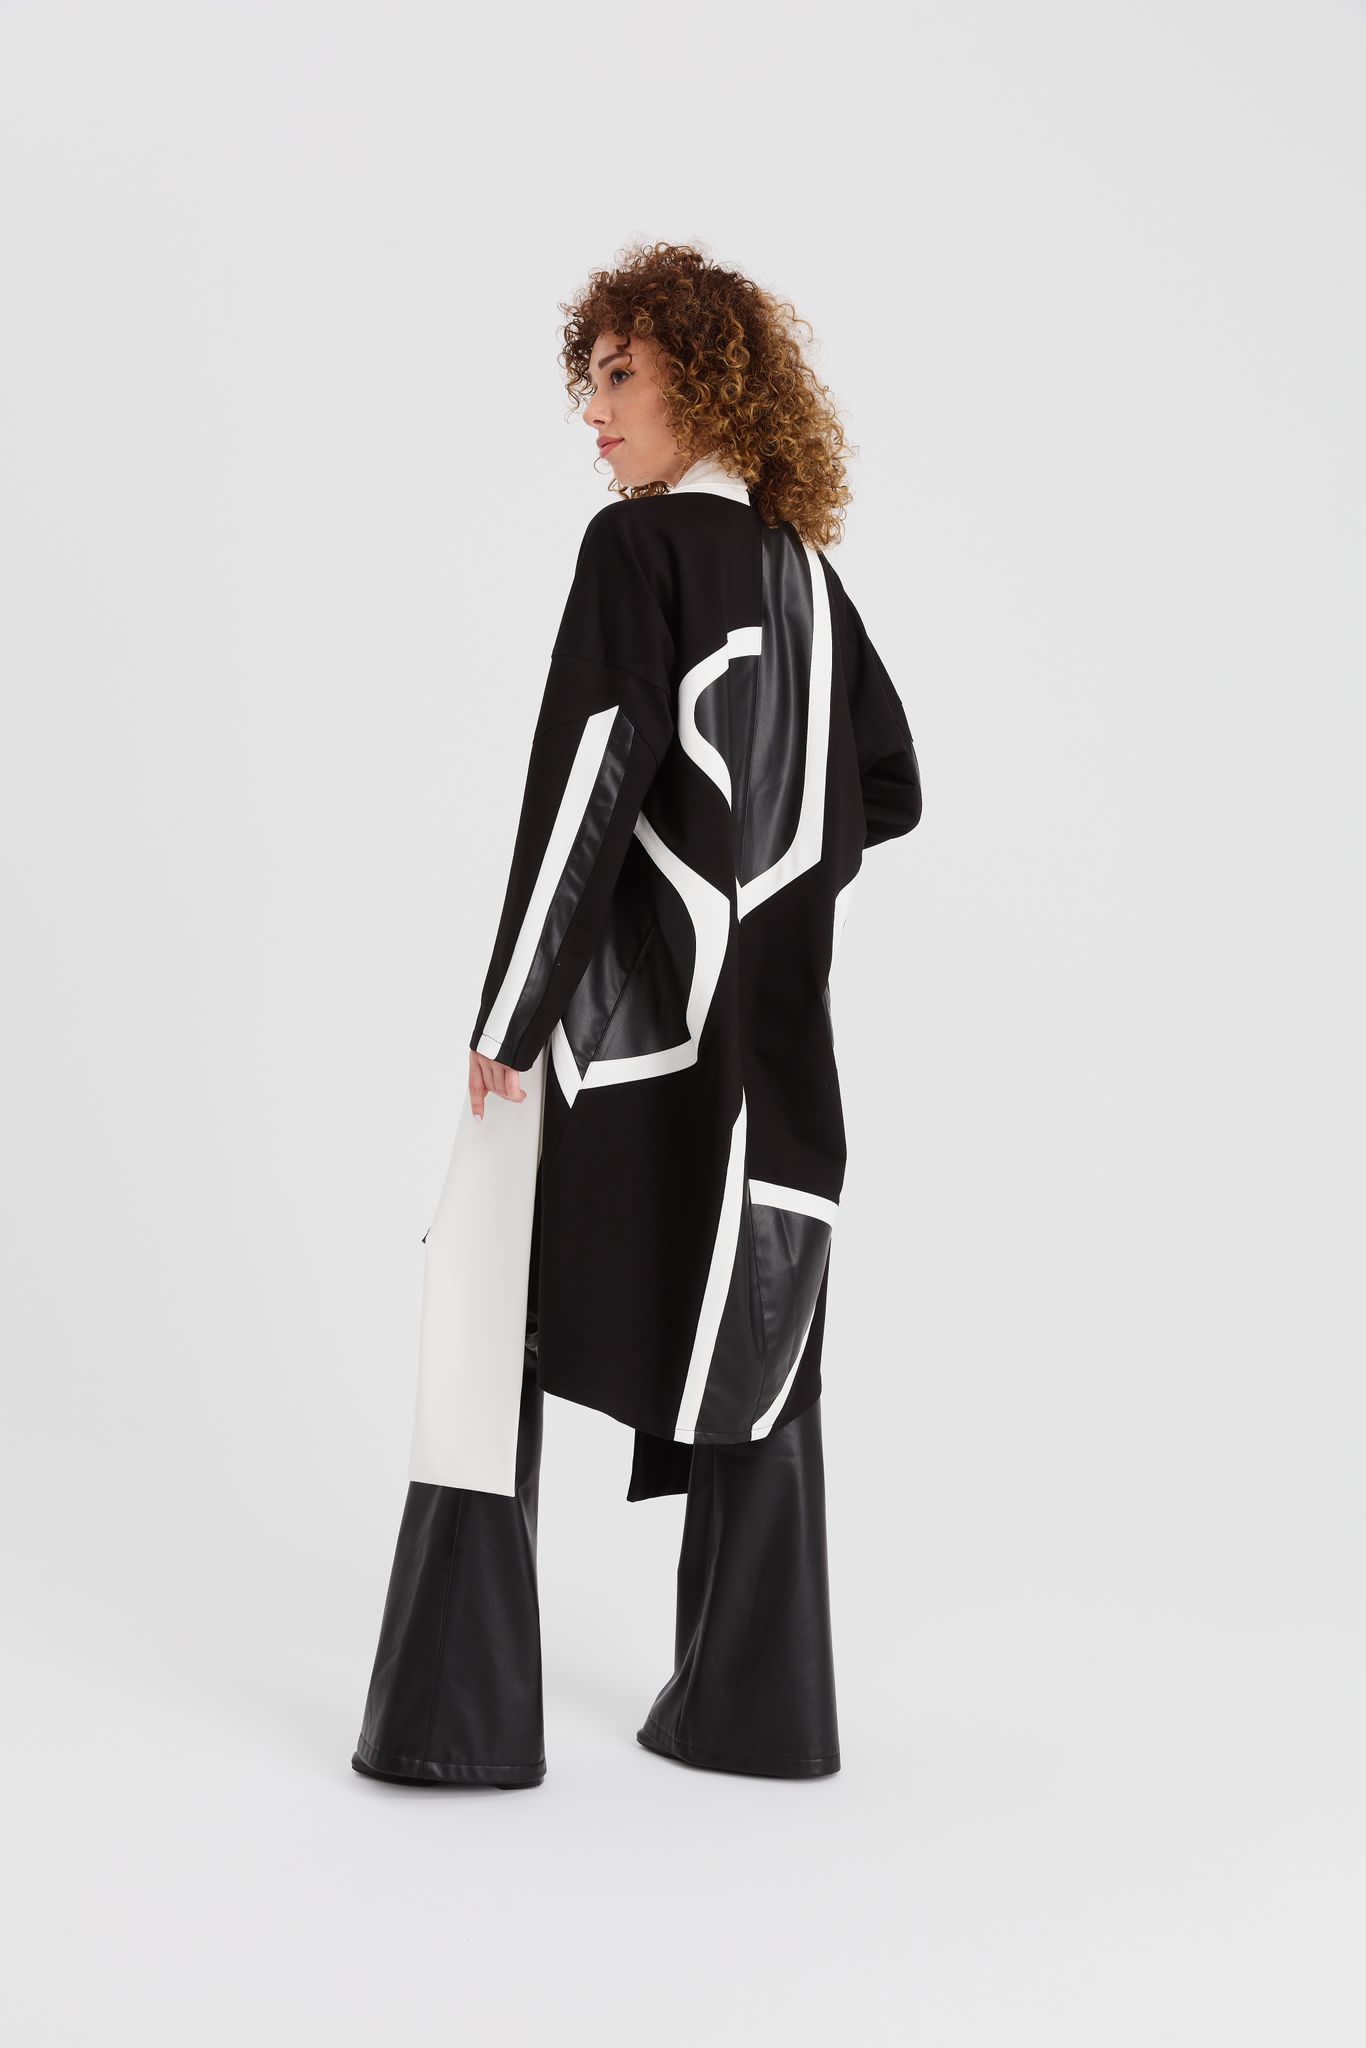 Designer Black & White Jacket Cardigan Design C-7